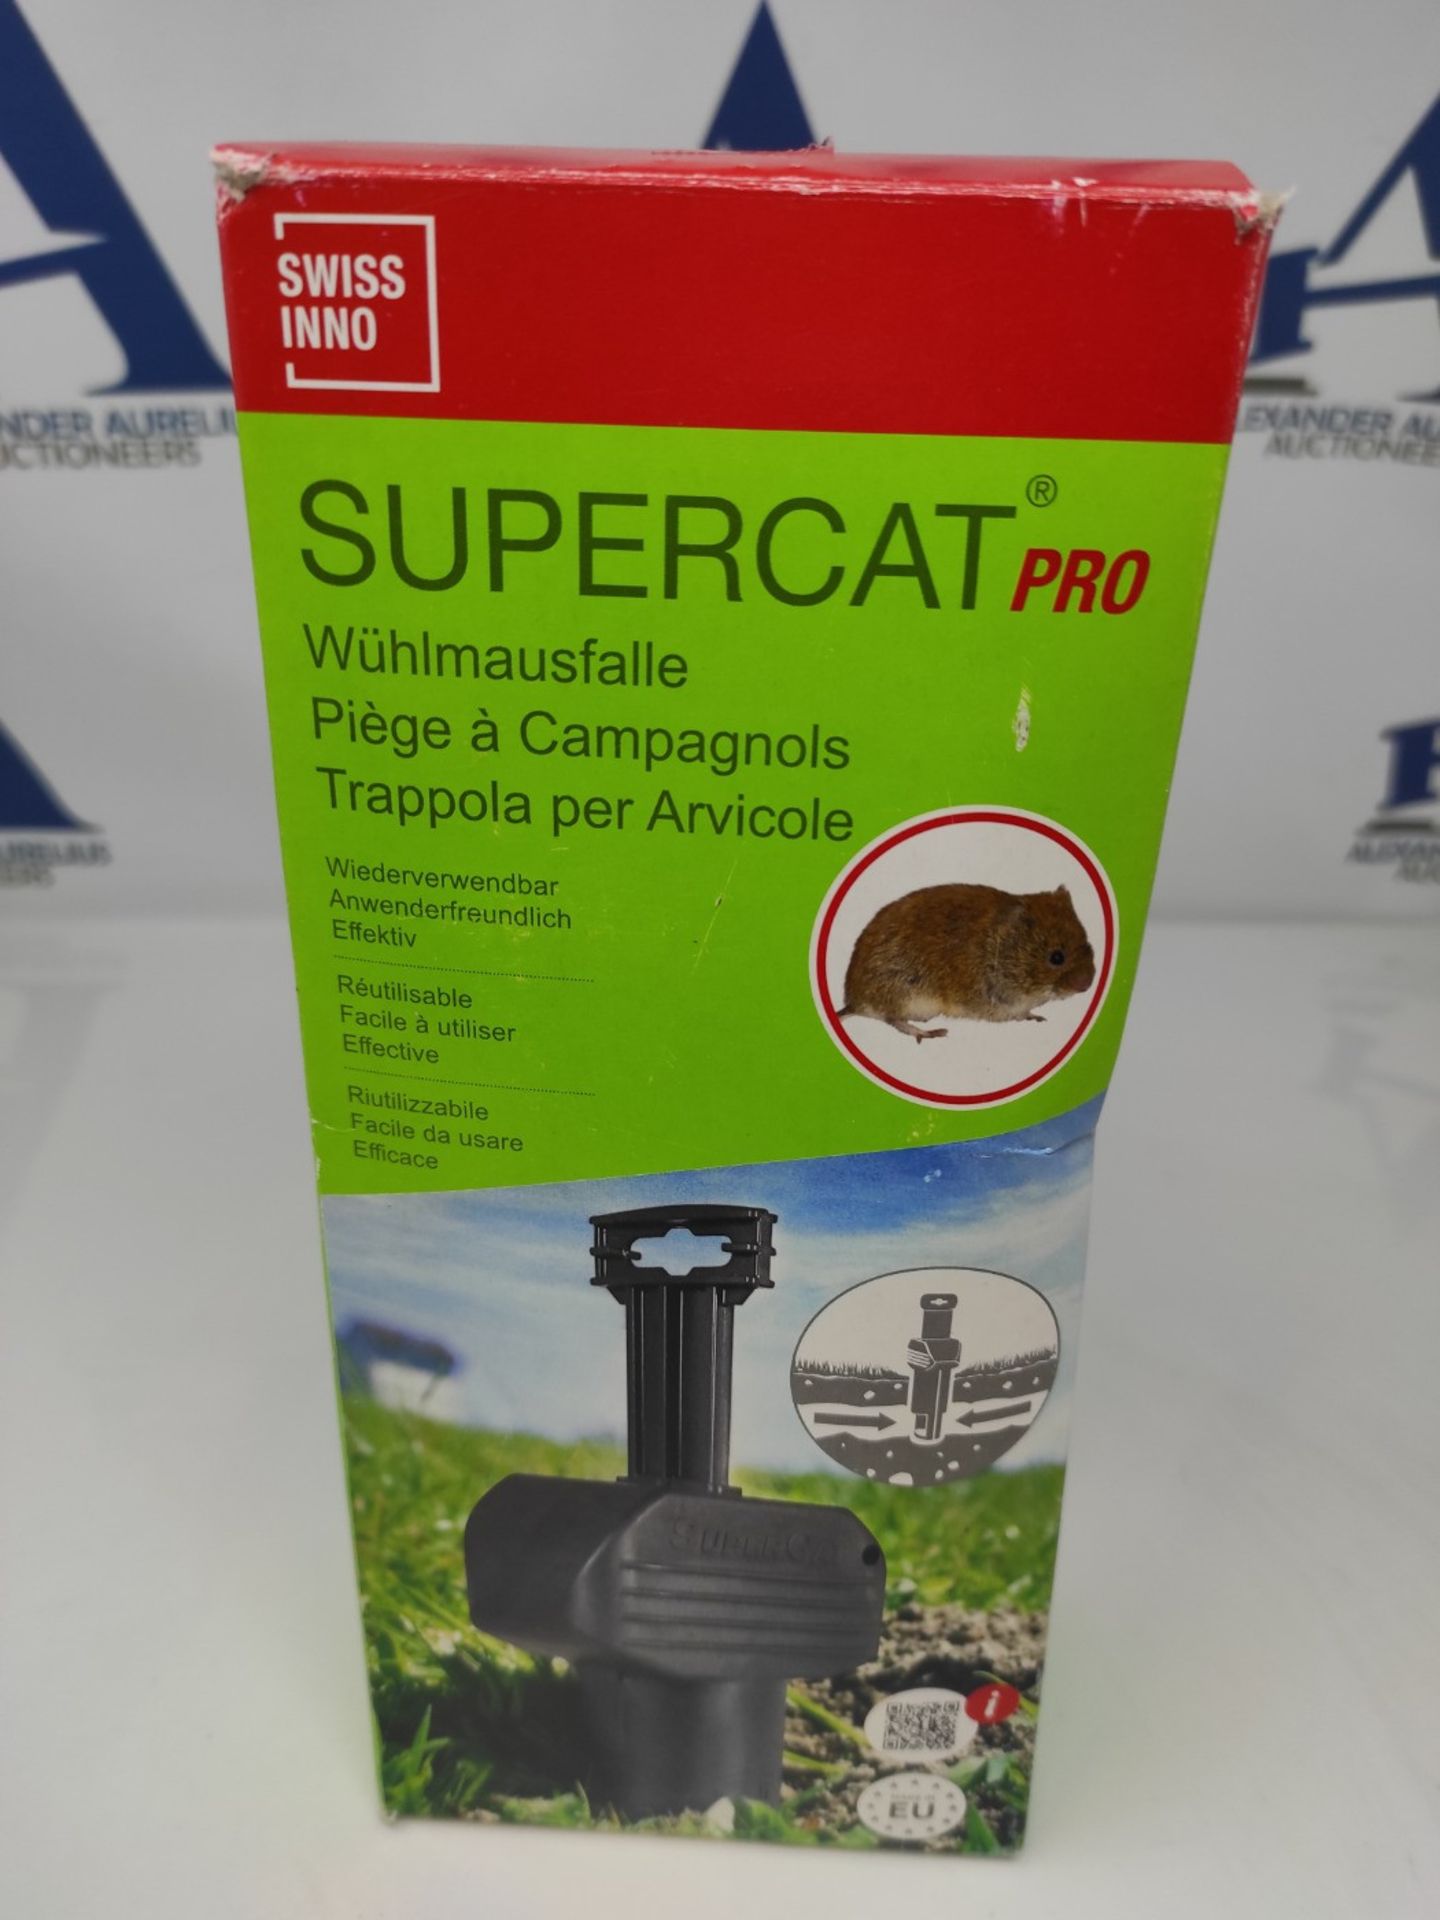 SWISSINNO Mole Trap PRO SuperCat. Controls moles and field mice - Very effective, Easy - Image 2 of 3